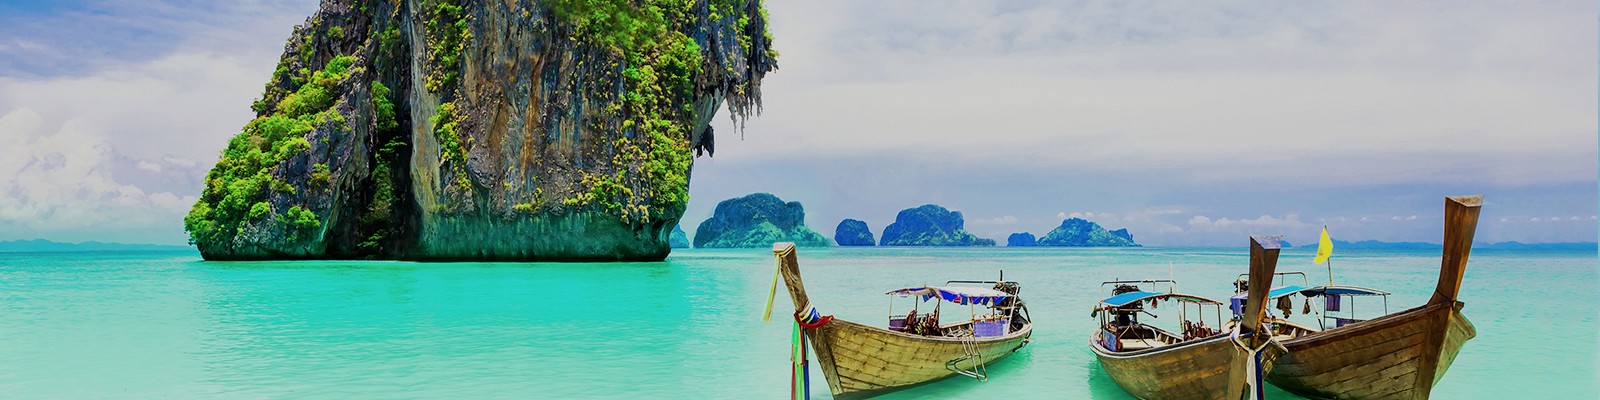 thailand honeymoon packages